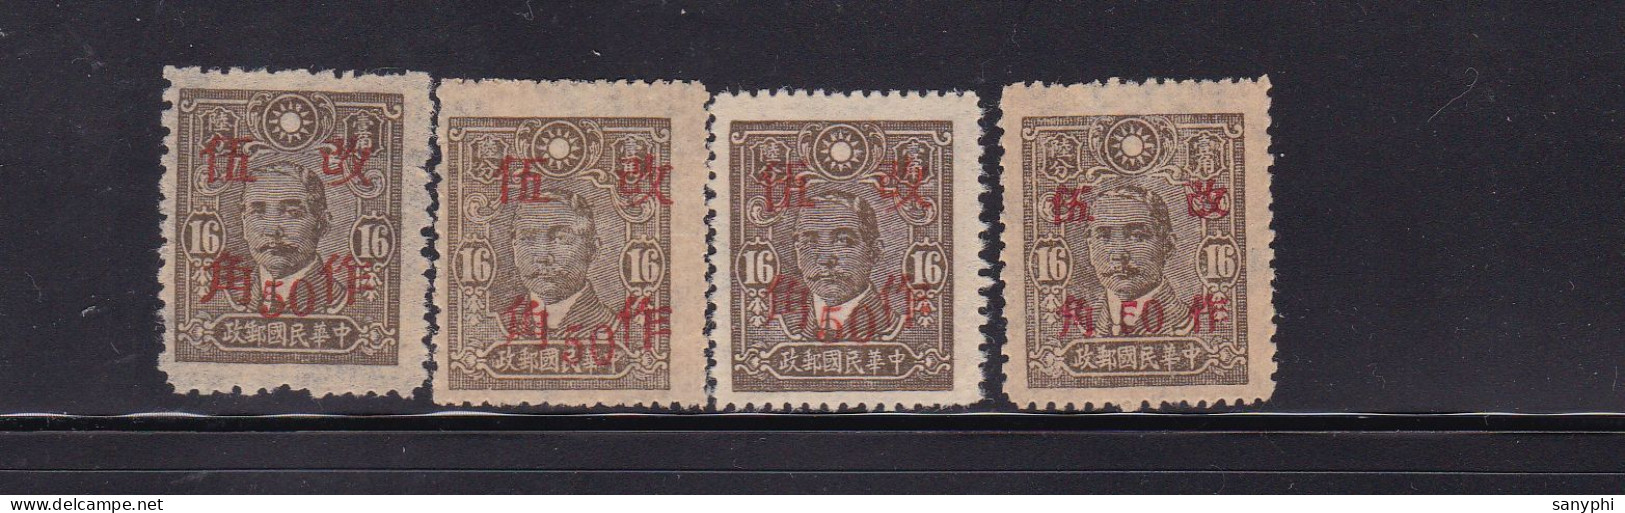 China Republic Dr Sun 16v Ovpt Various Provinces,4 Unused Stamps - 1912-1949 Republic